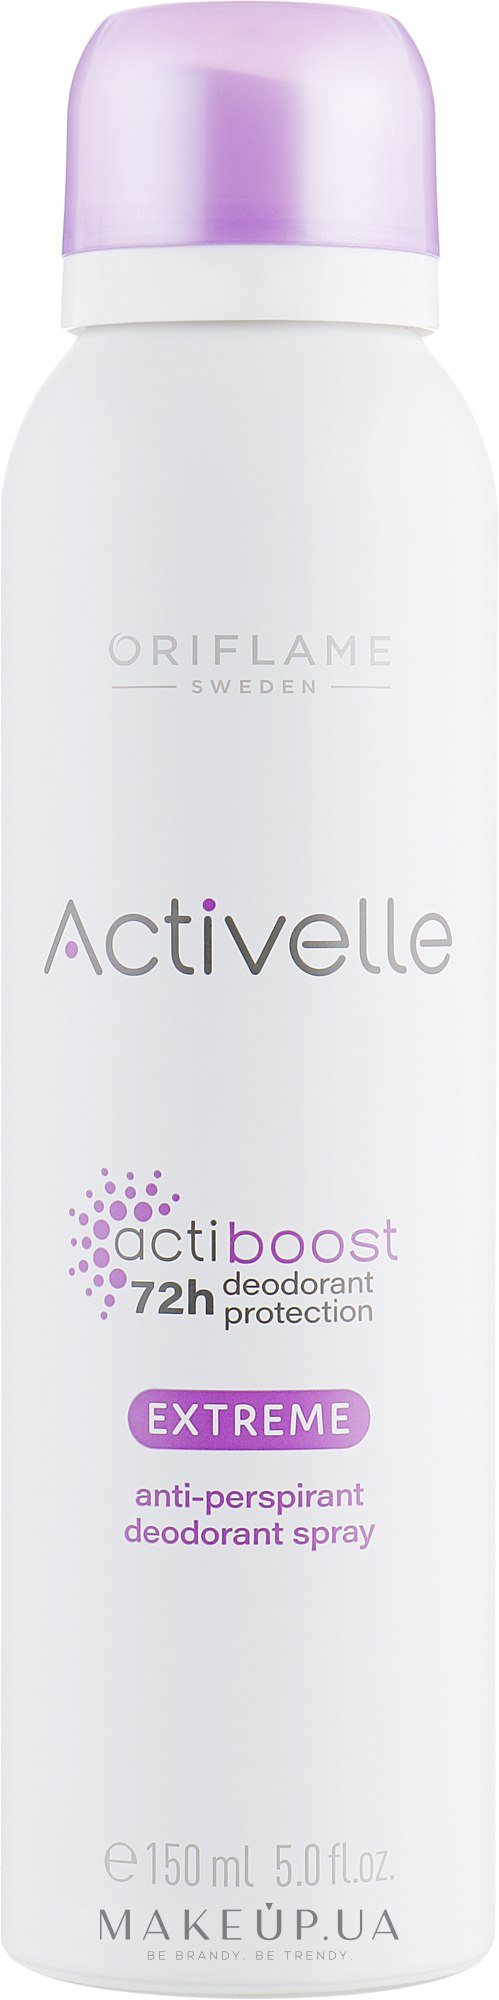 Спрей дезодорант-антиперспирант 72-часового действия - Oriflame Activelle Actiboost Extreme — фото 150ml